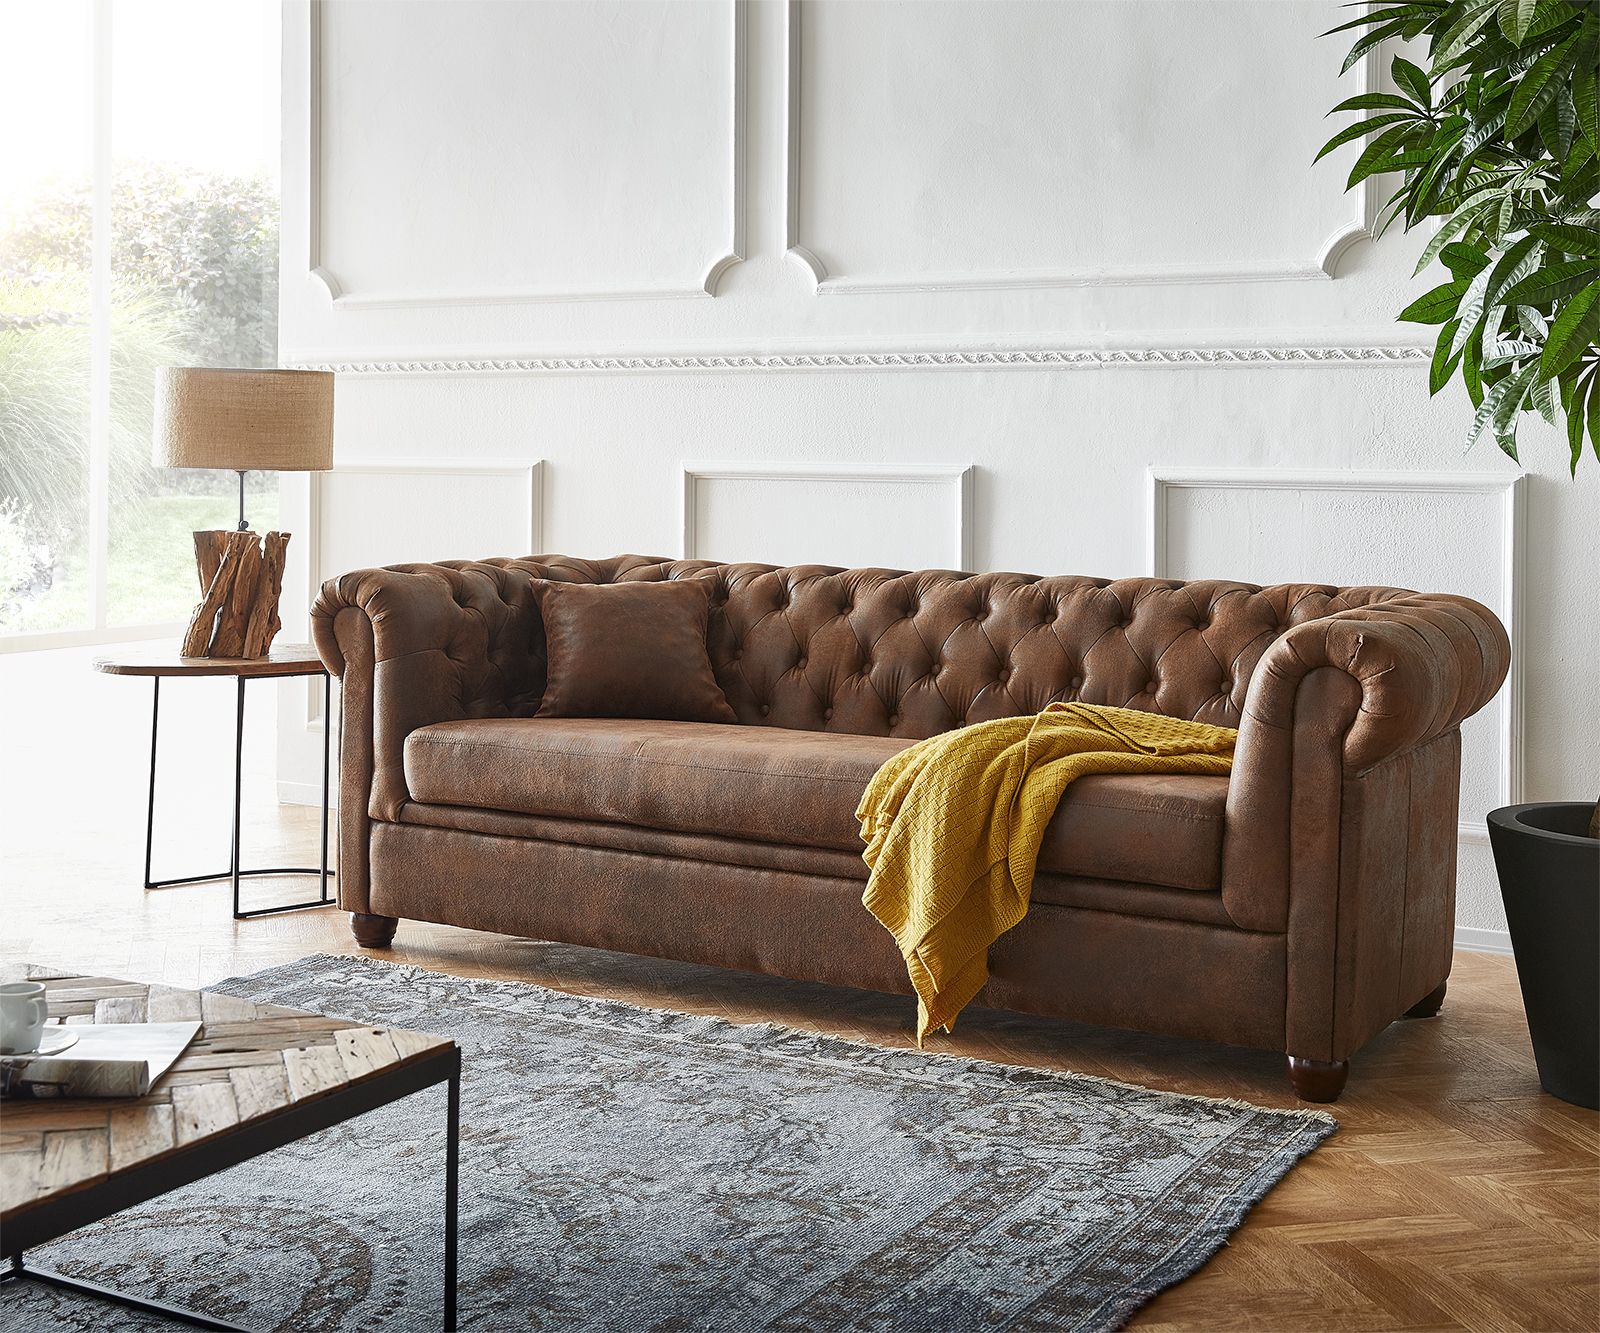 DELIFE Sofa Chesterfield 200×88 Braun Vintage Optik 3-Sitzer Couch, 3 Sitzer